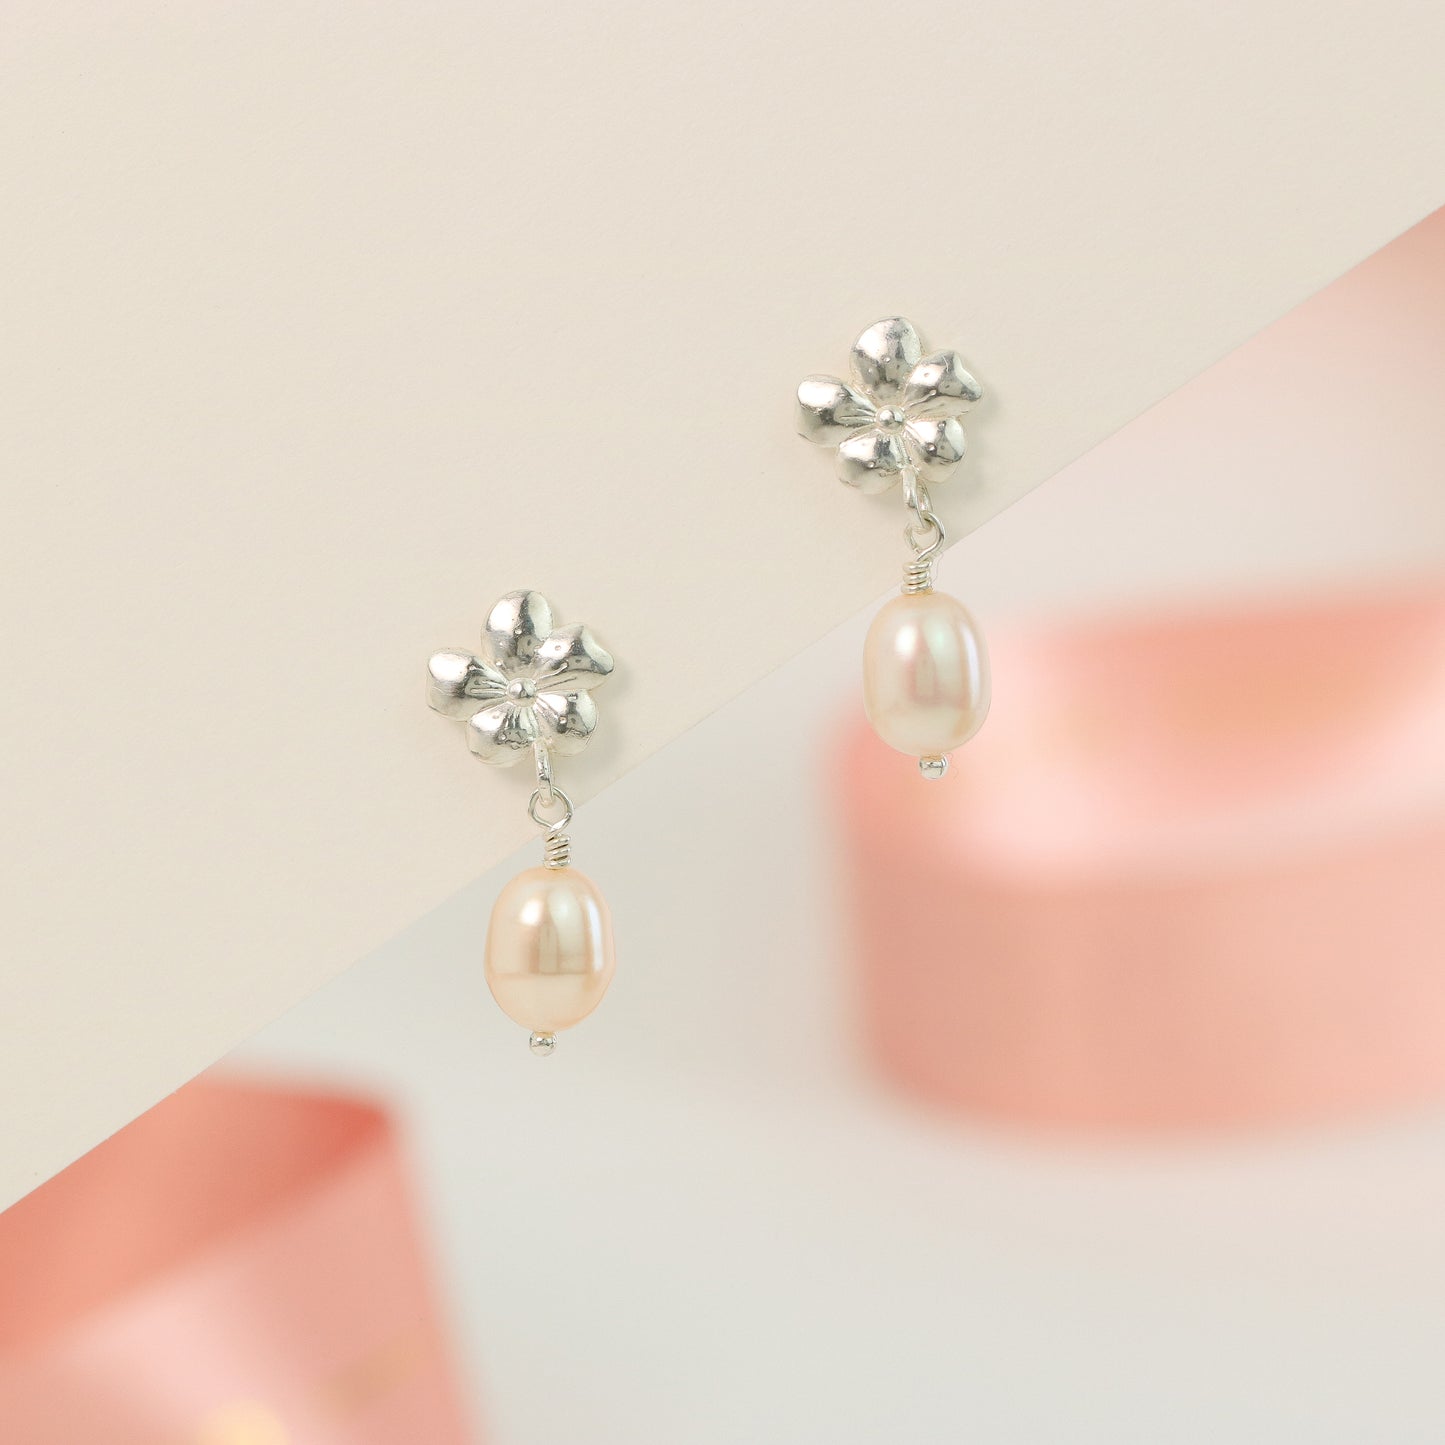 Cherry Blossom Flower Earrings - Luck - Silver & Pearl